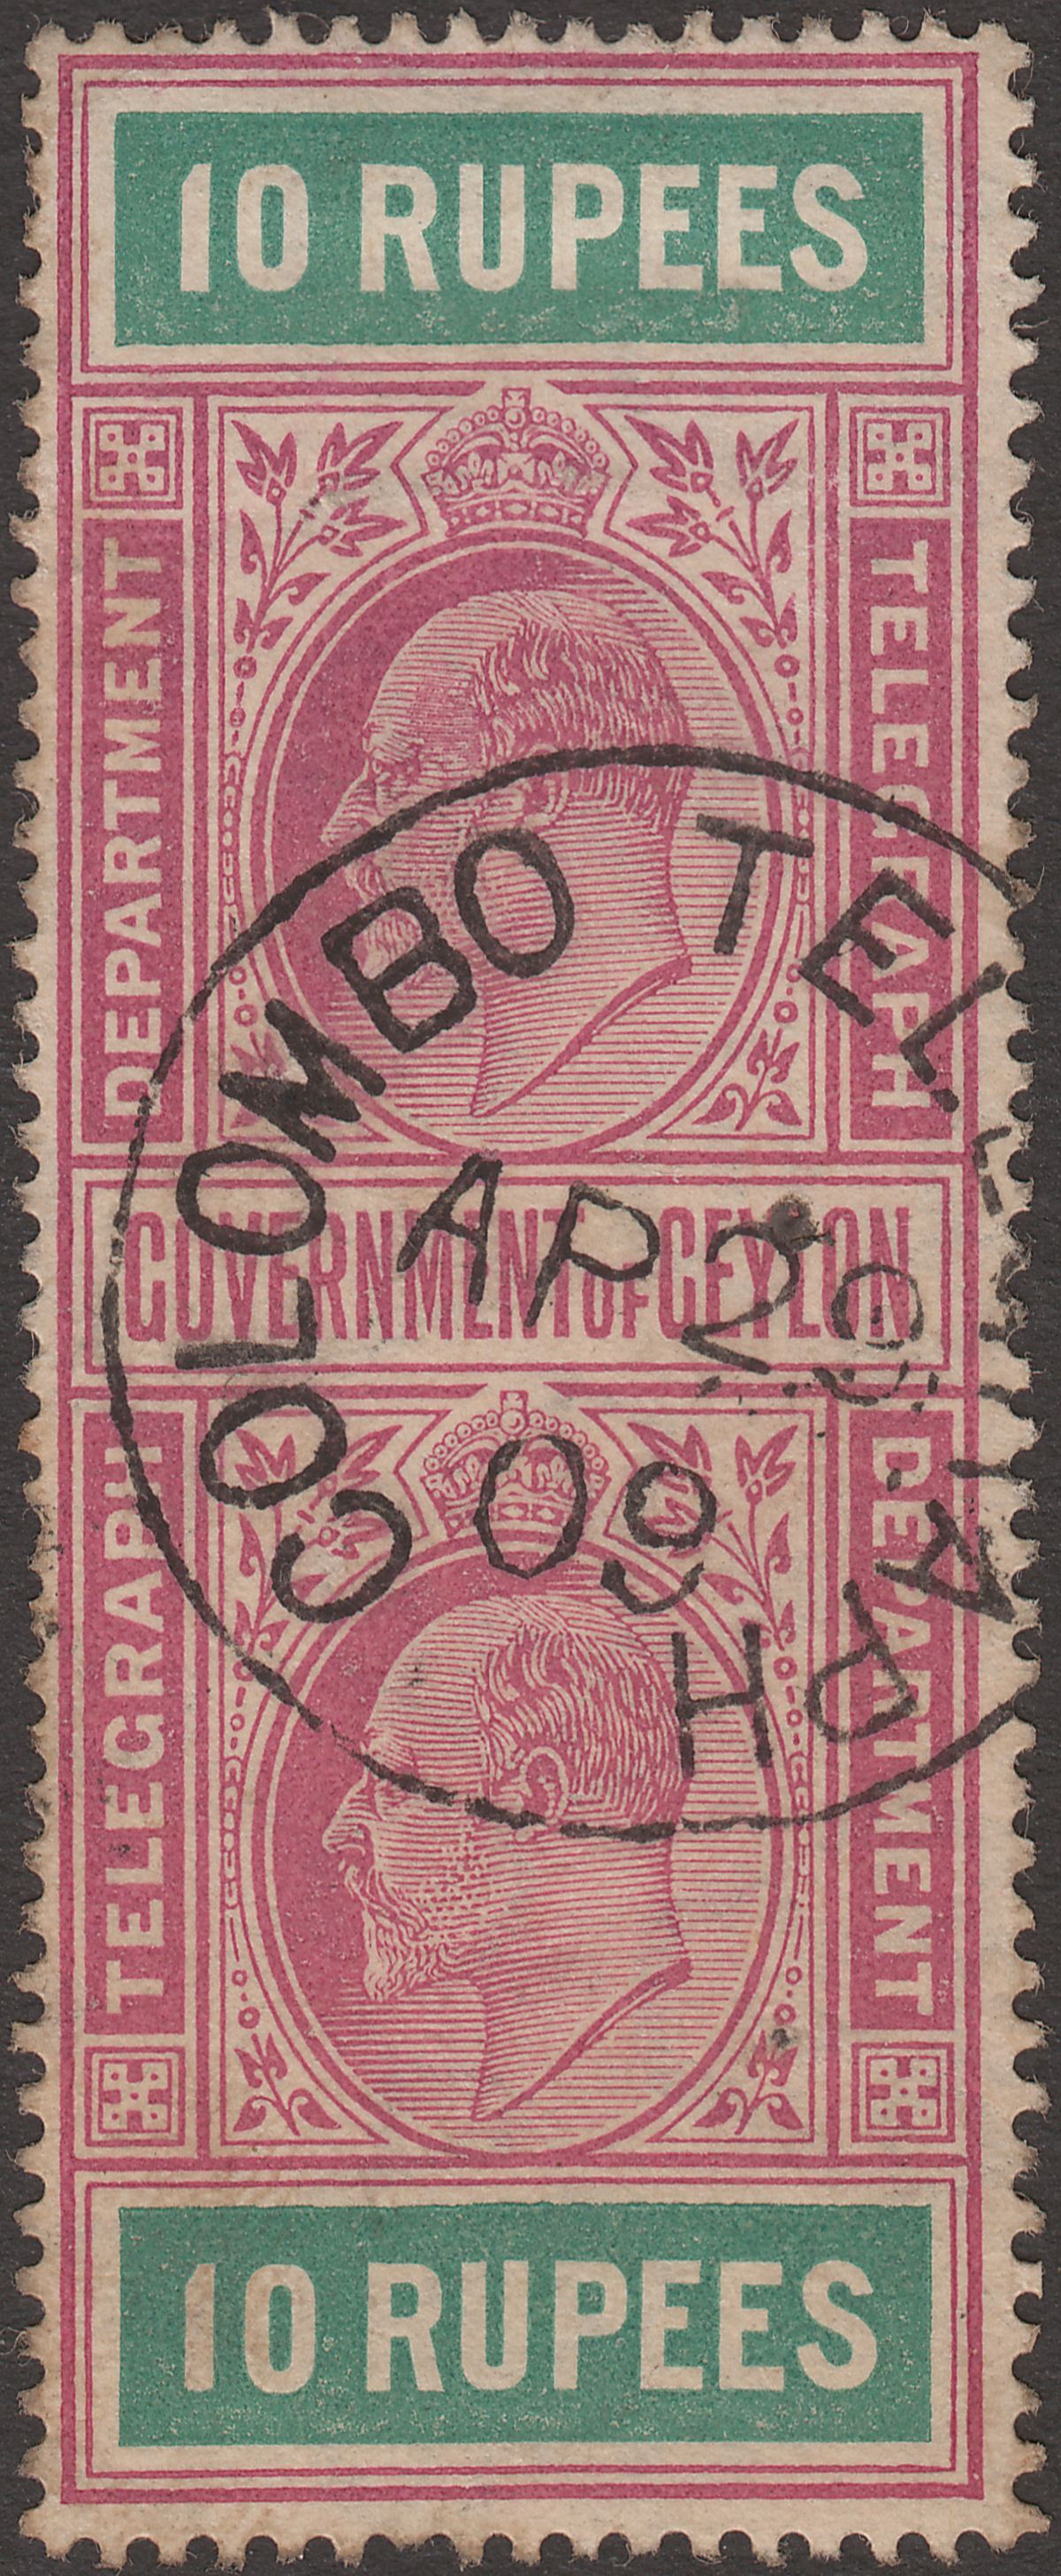 Ceylon 1905 King Edward VII Telegraph 10r Reddish Purple and Green Used Whole